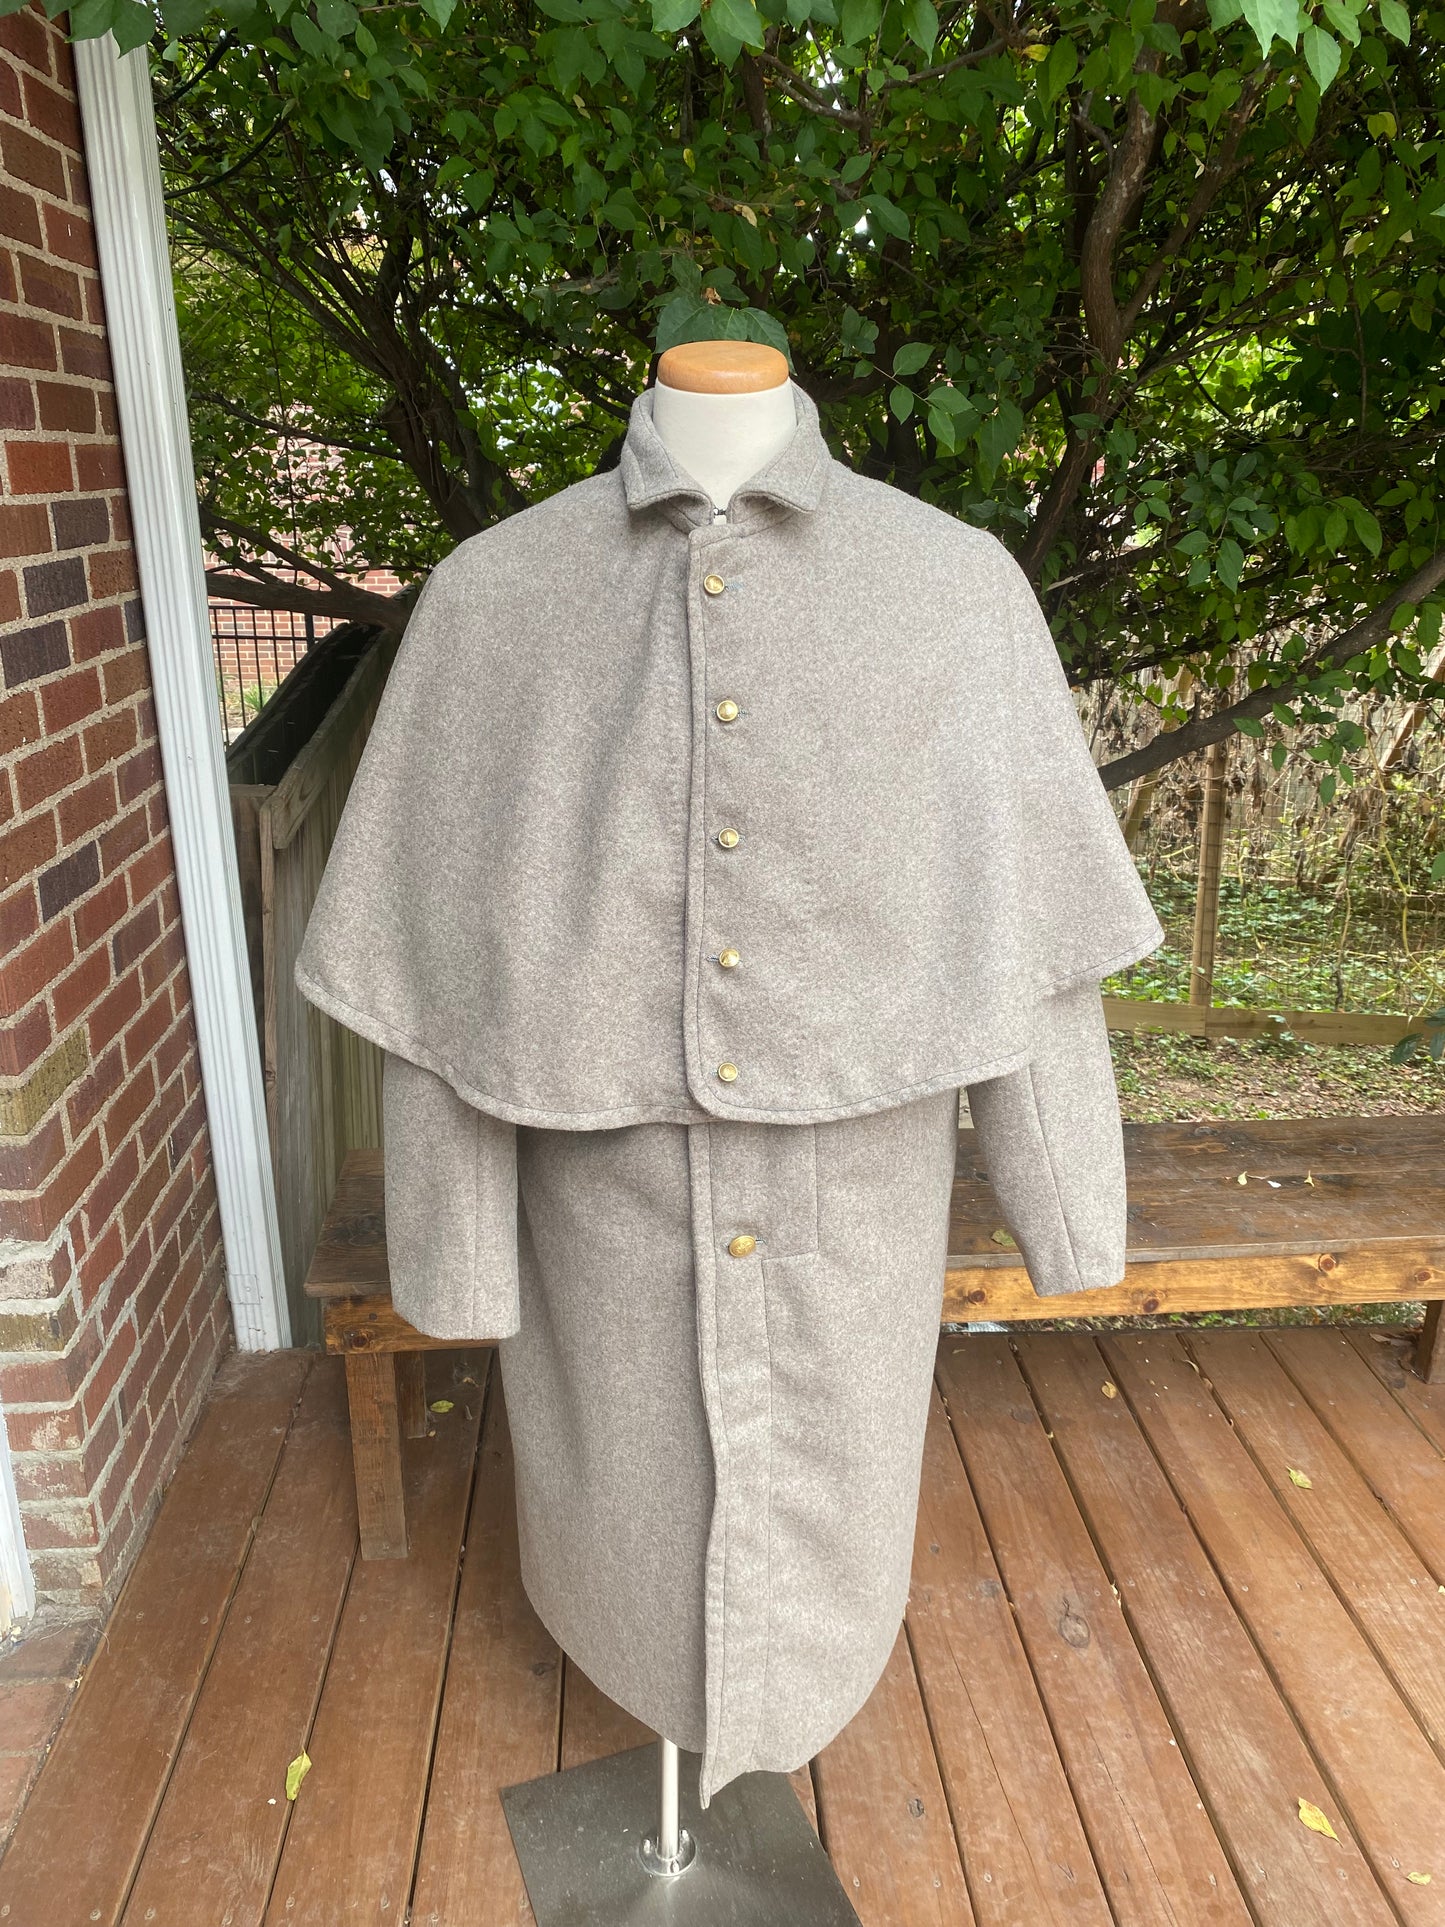 5th Texas Infantry Overcoat (Crude Broadcloth) 1861-1865